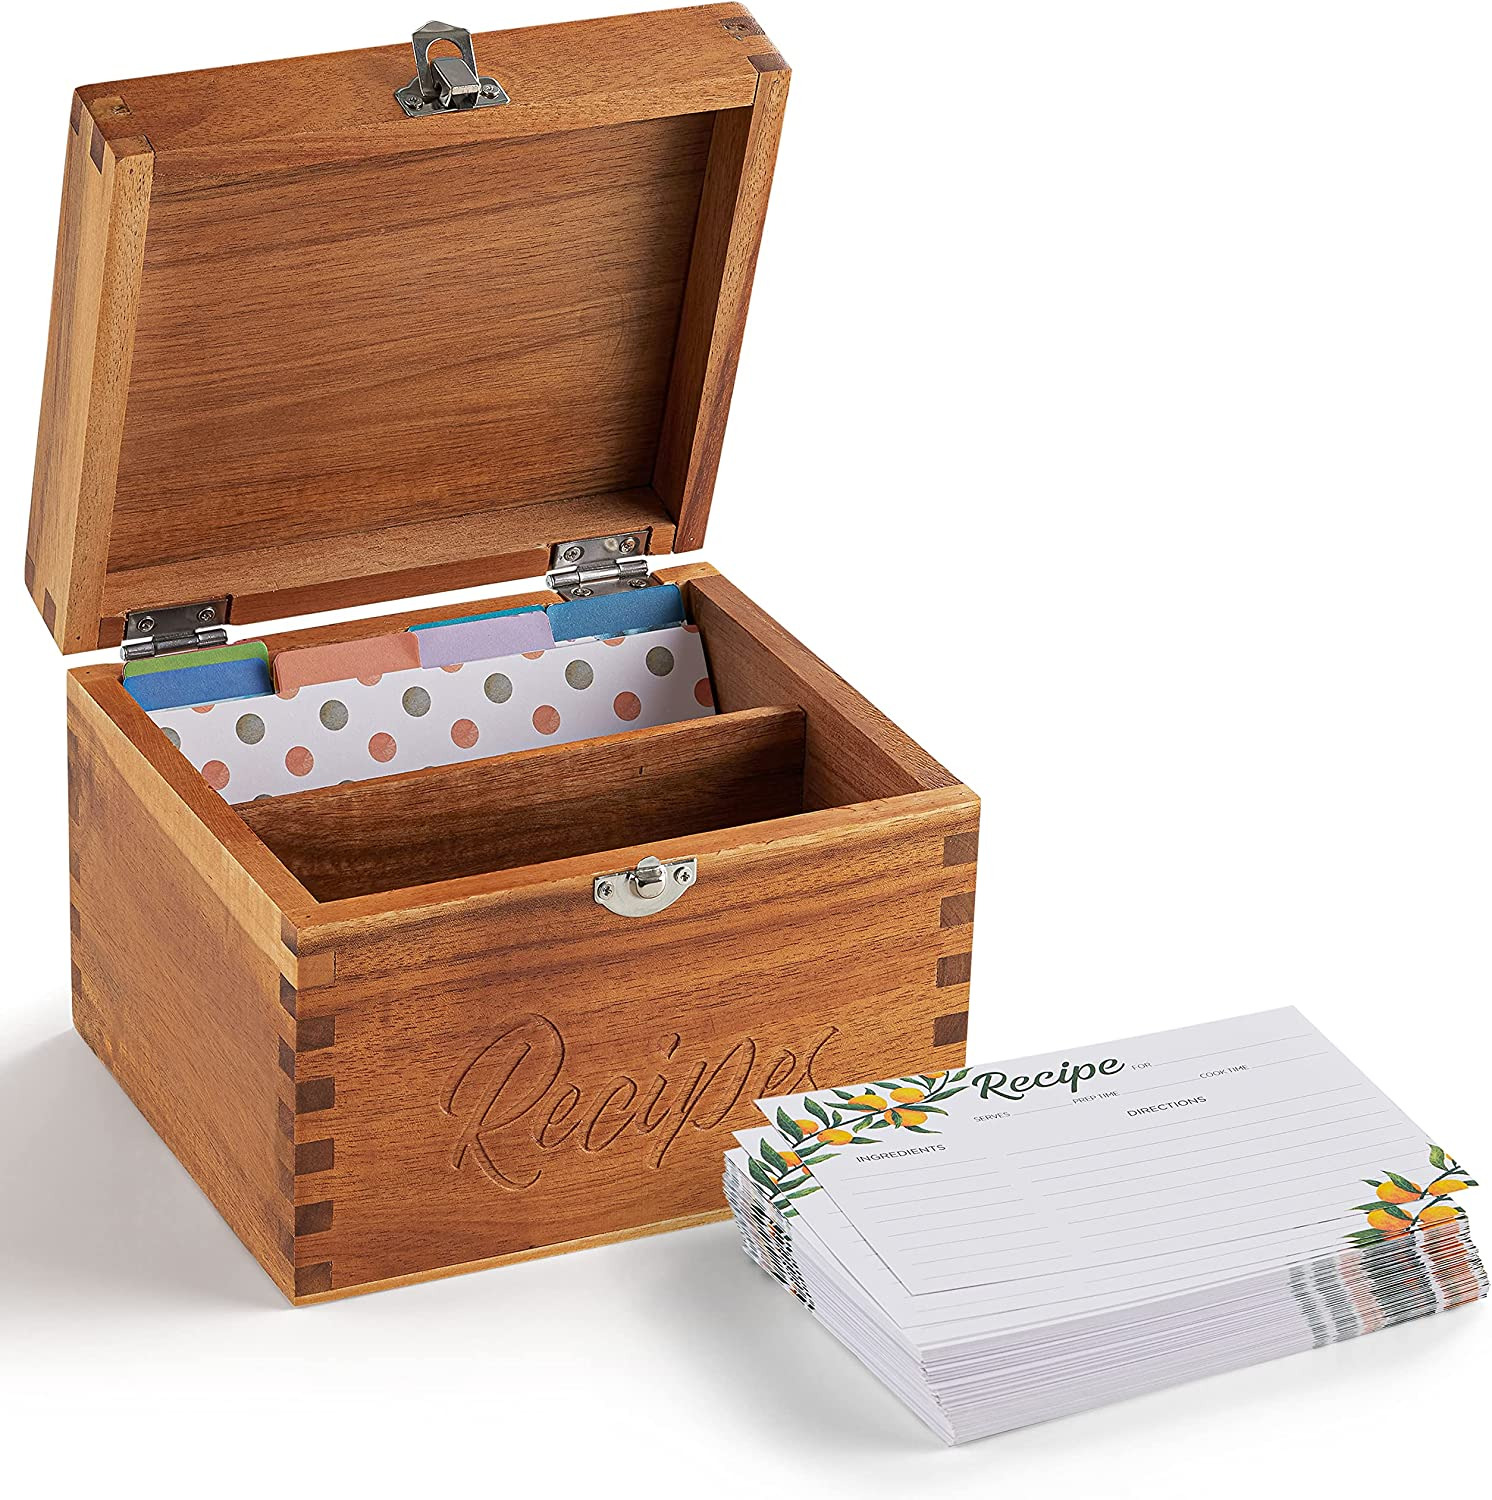 Tidita Acacia Wood Recipe Box with Cards - Blank Recipe Box Wooden Set Come